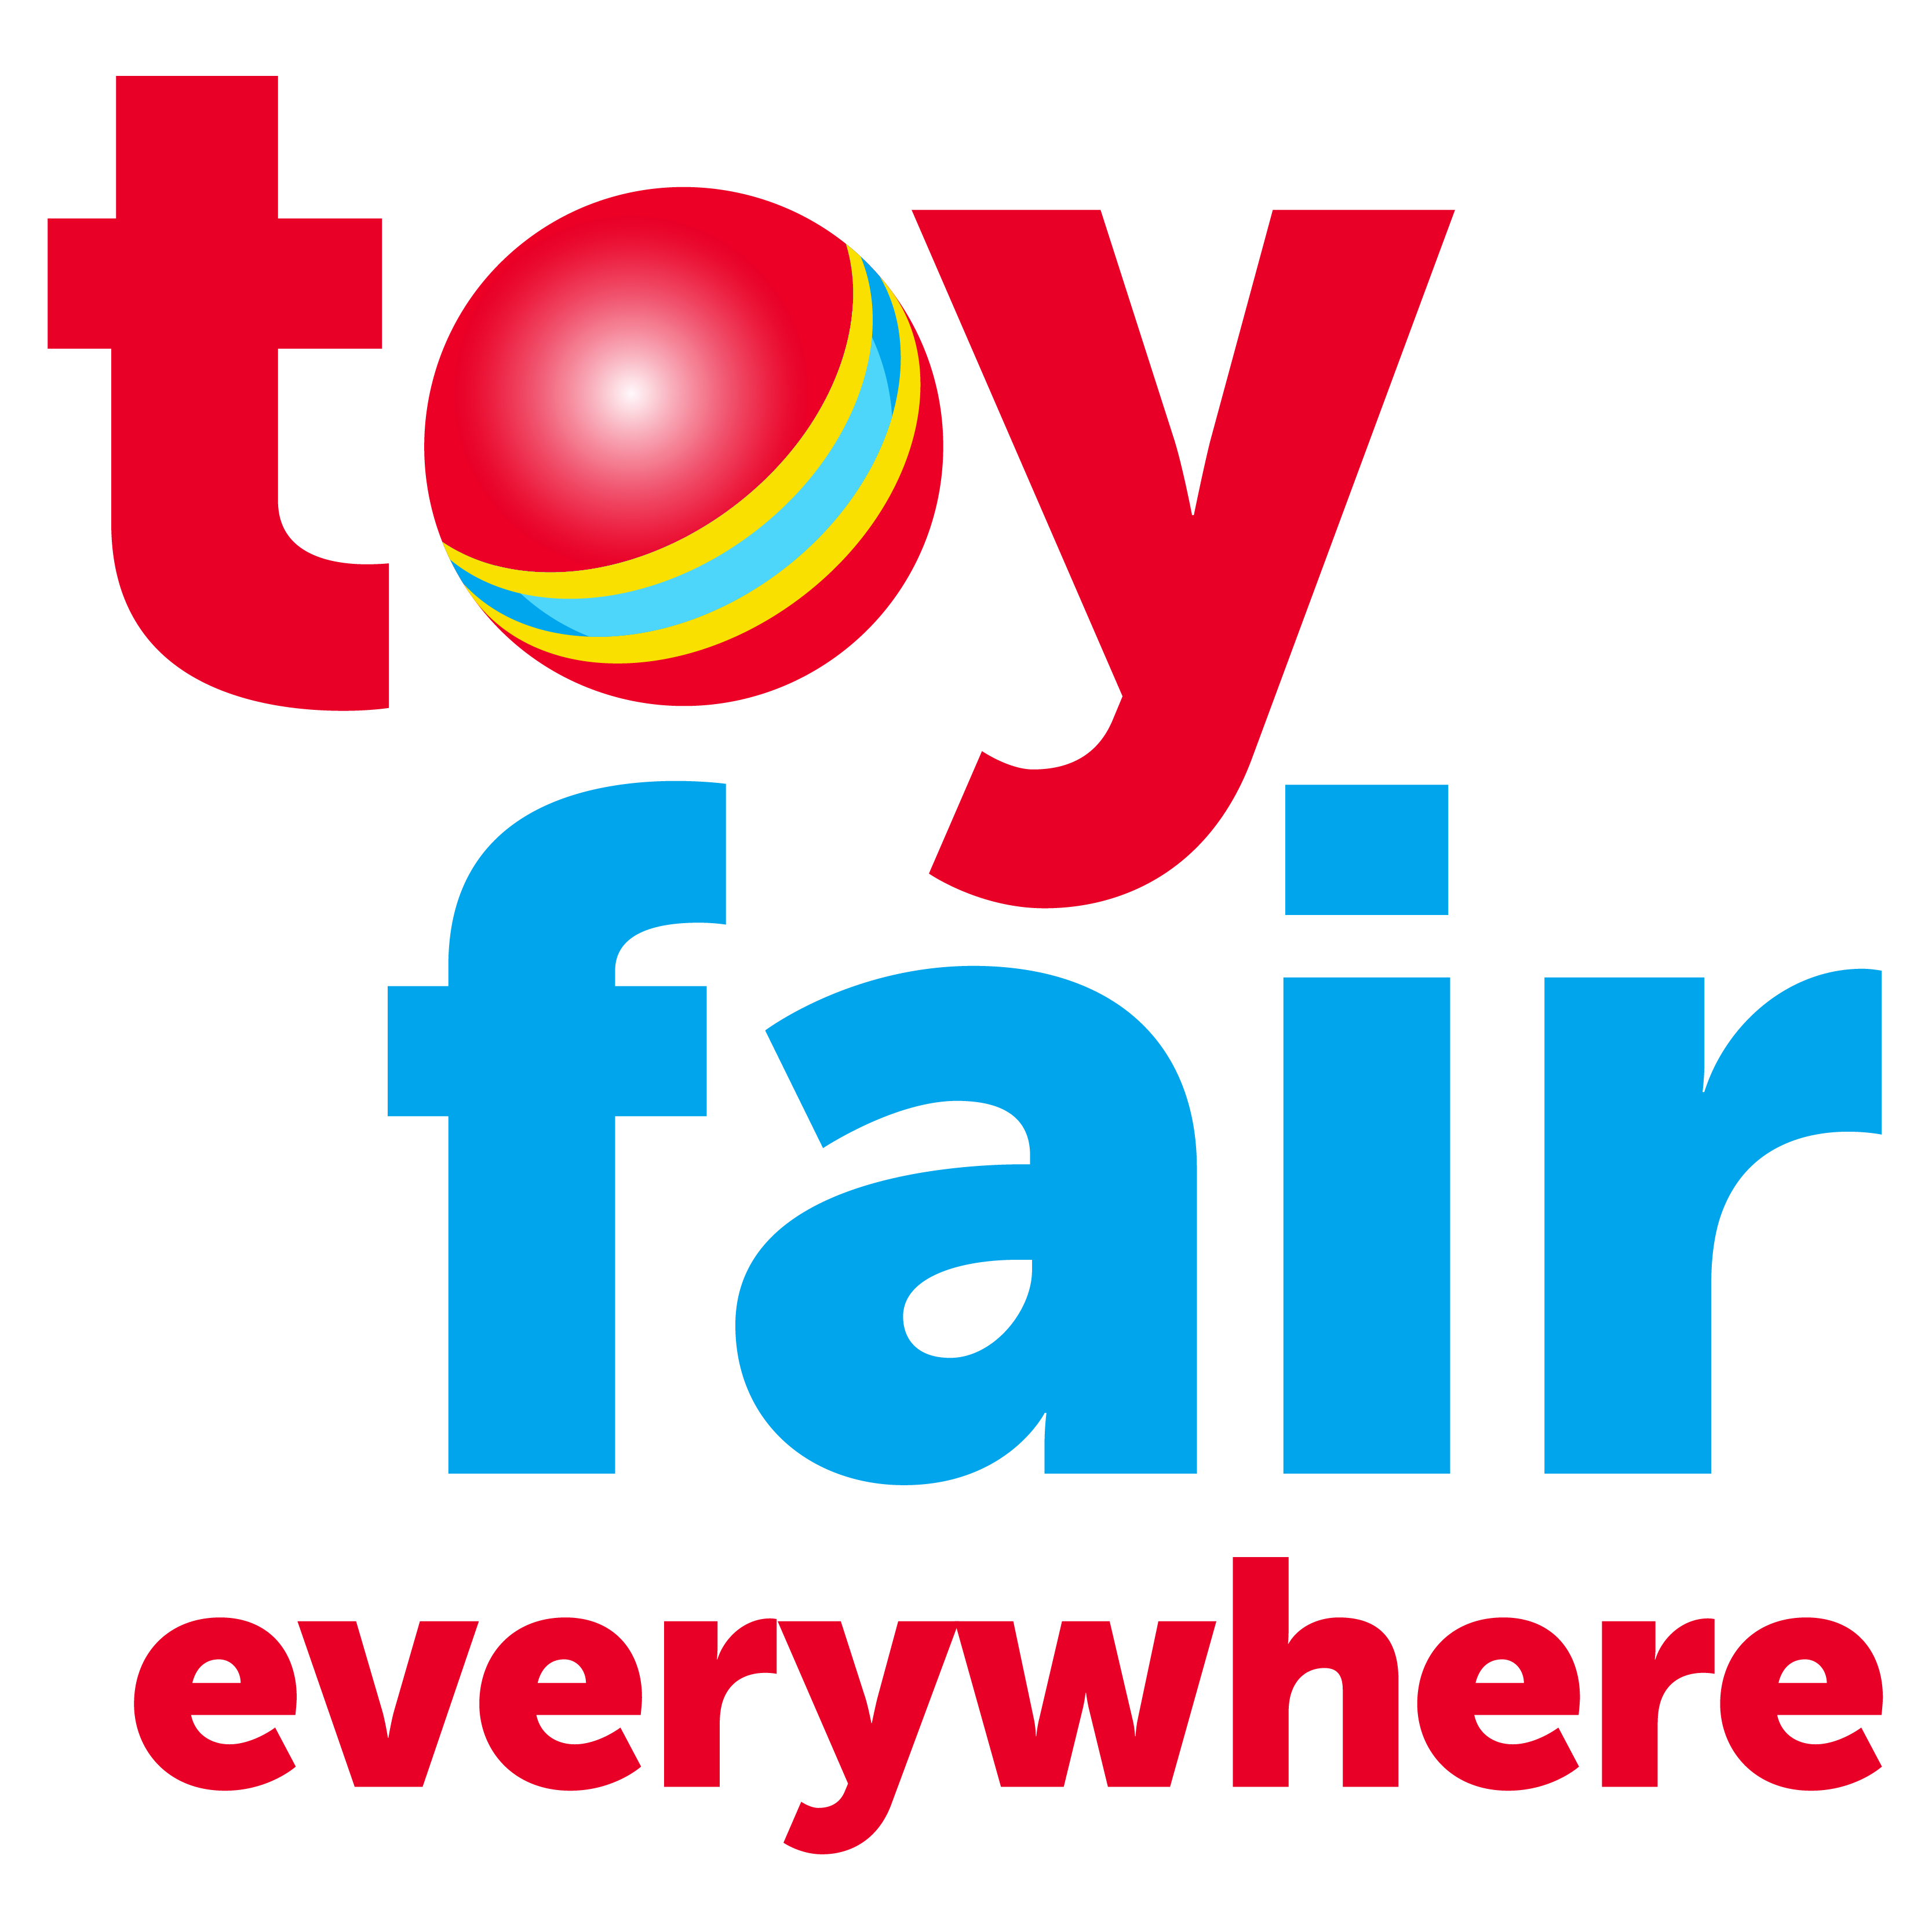 toy-fair-everywhere